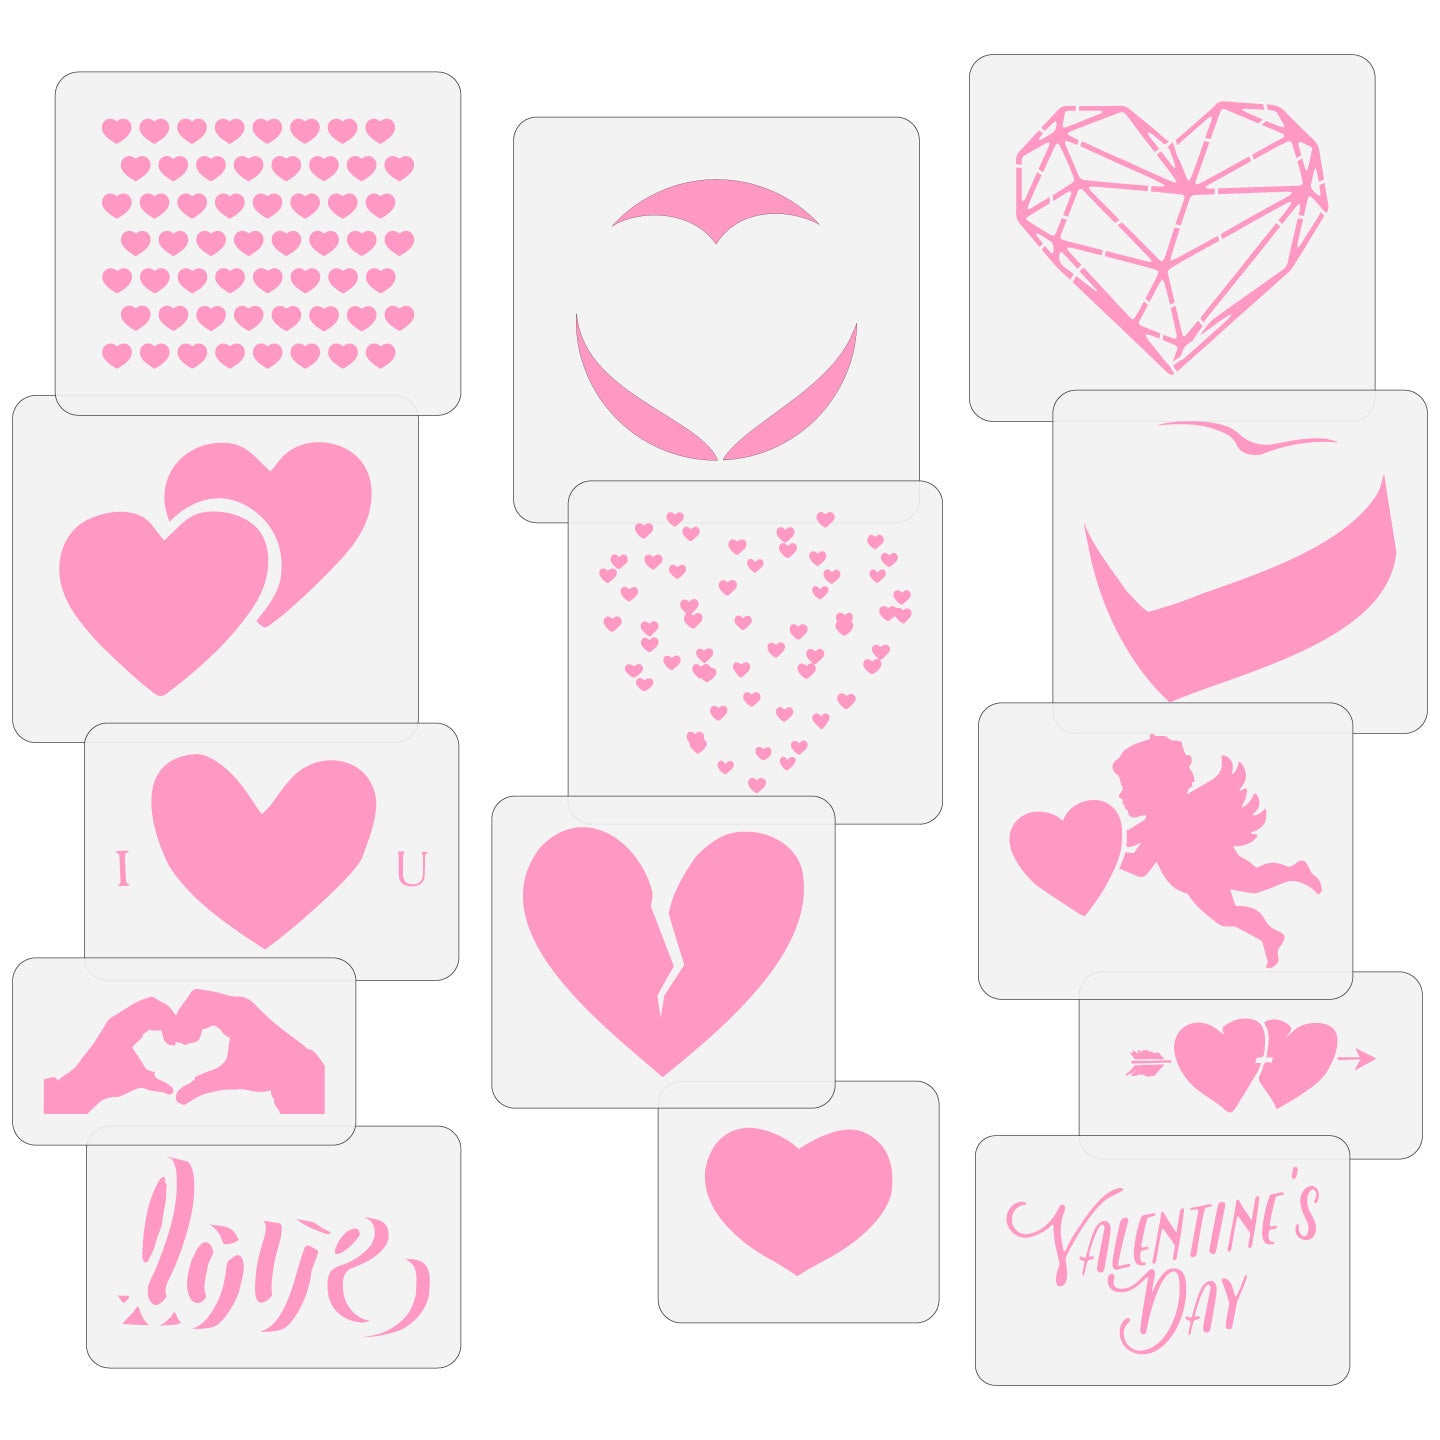 Printable Heart Stencils (Valentine's Day Love Font Patterns